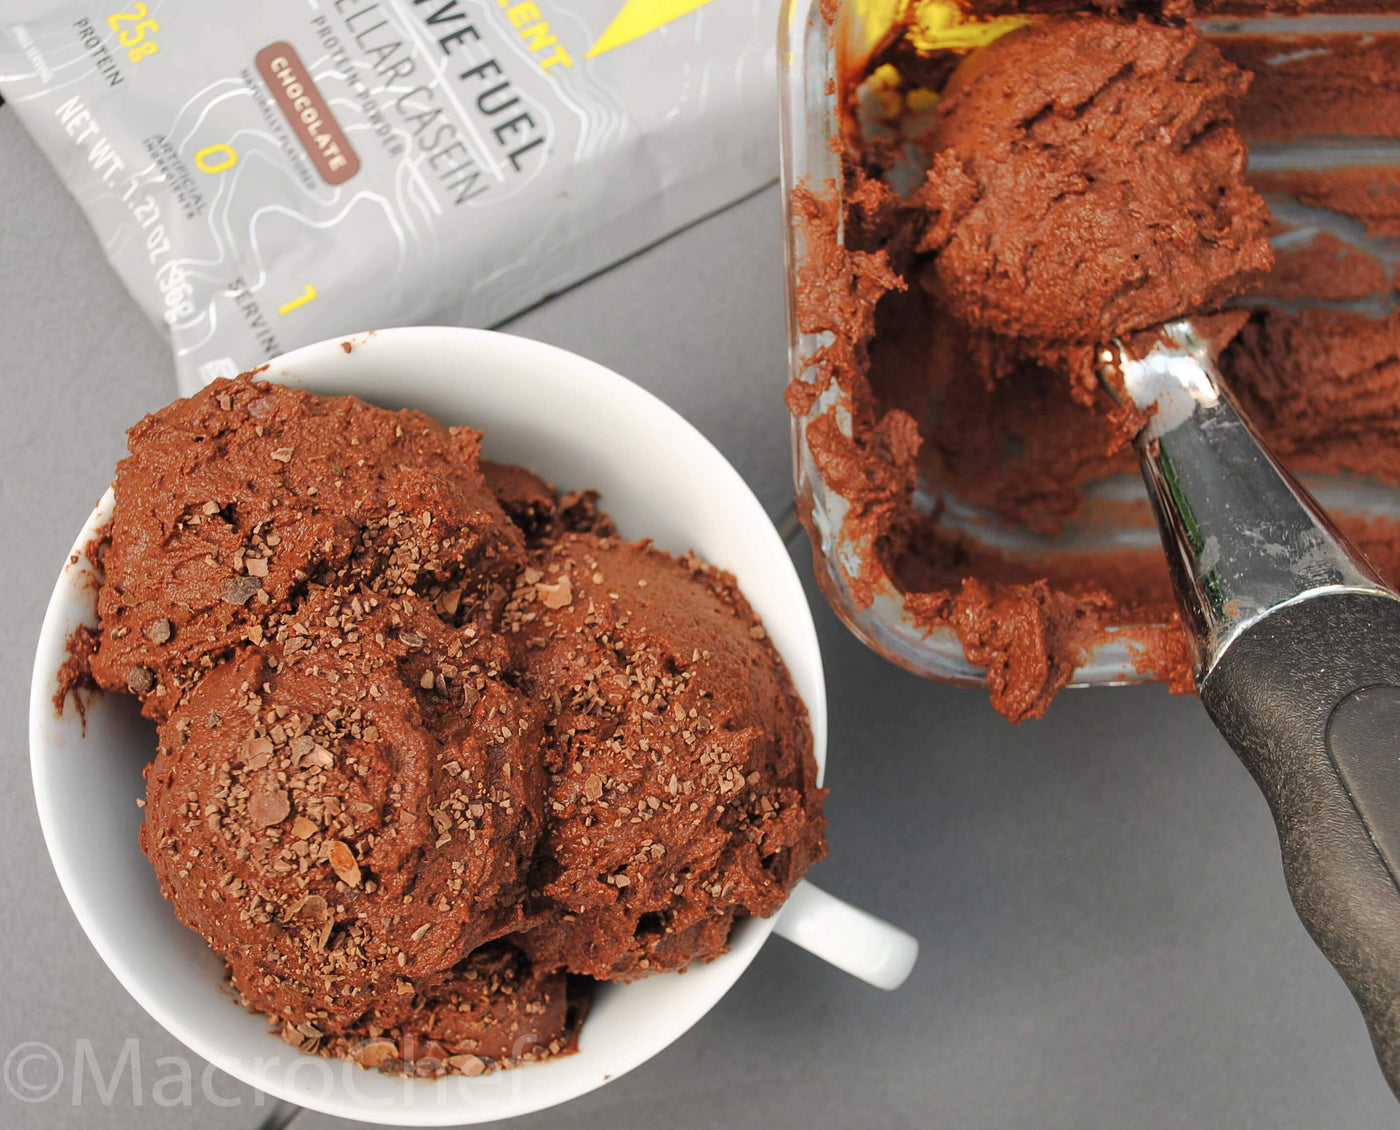 Chocolate Mocha Protein Ice Cream